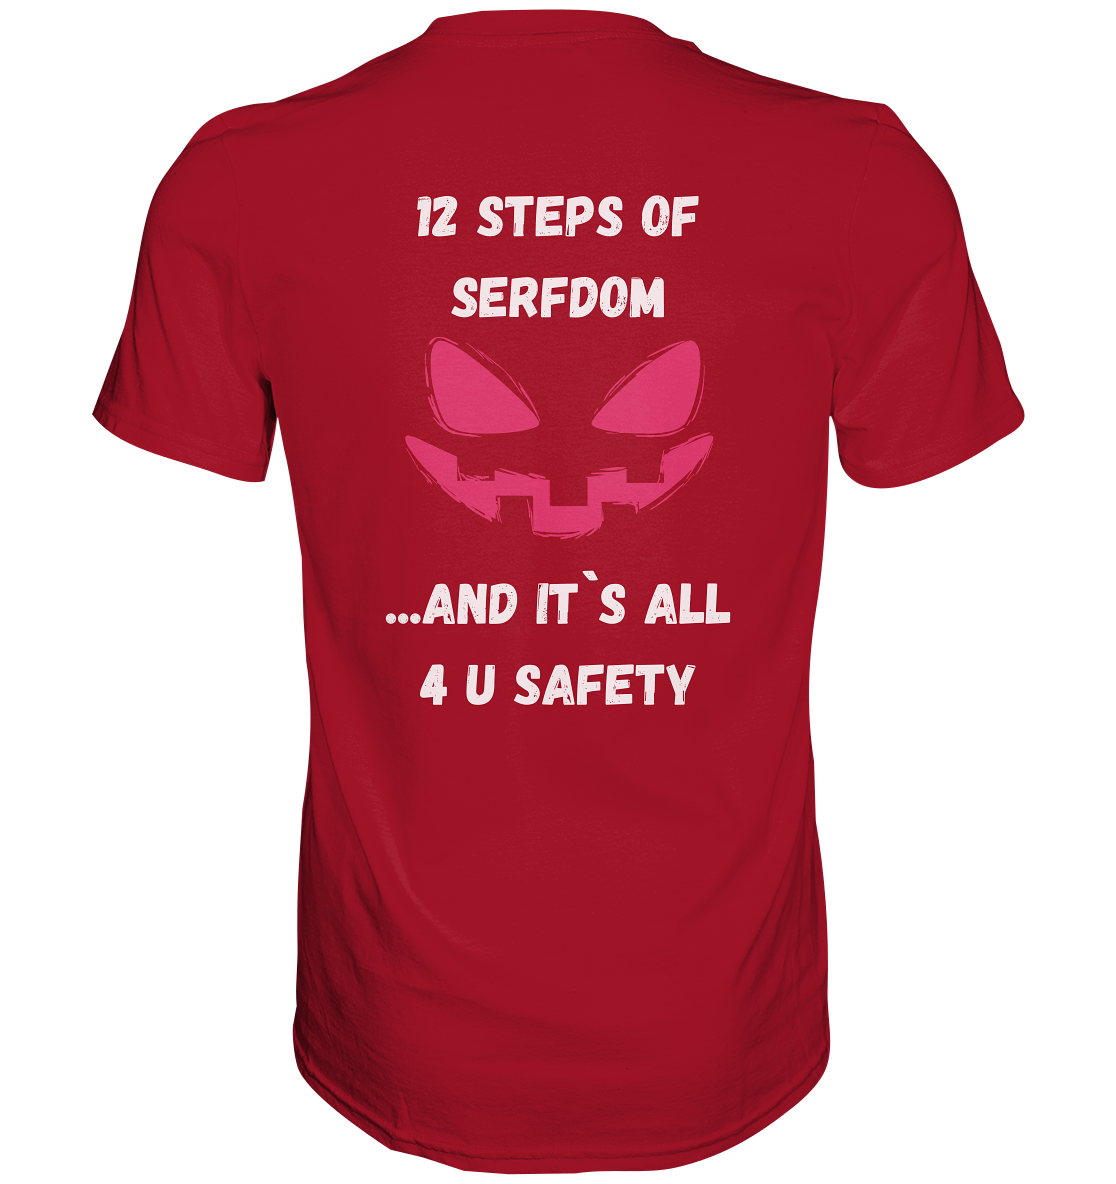 1st from 12 steps of serfdom - IT`S ALL 4 U SAFETY - RÜCKENDRUCK FARBIG (Herren, Men)  - Classic Shirt